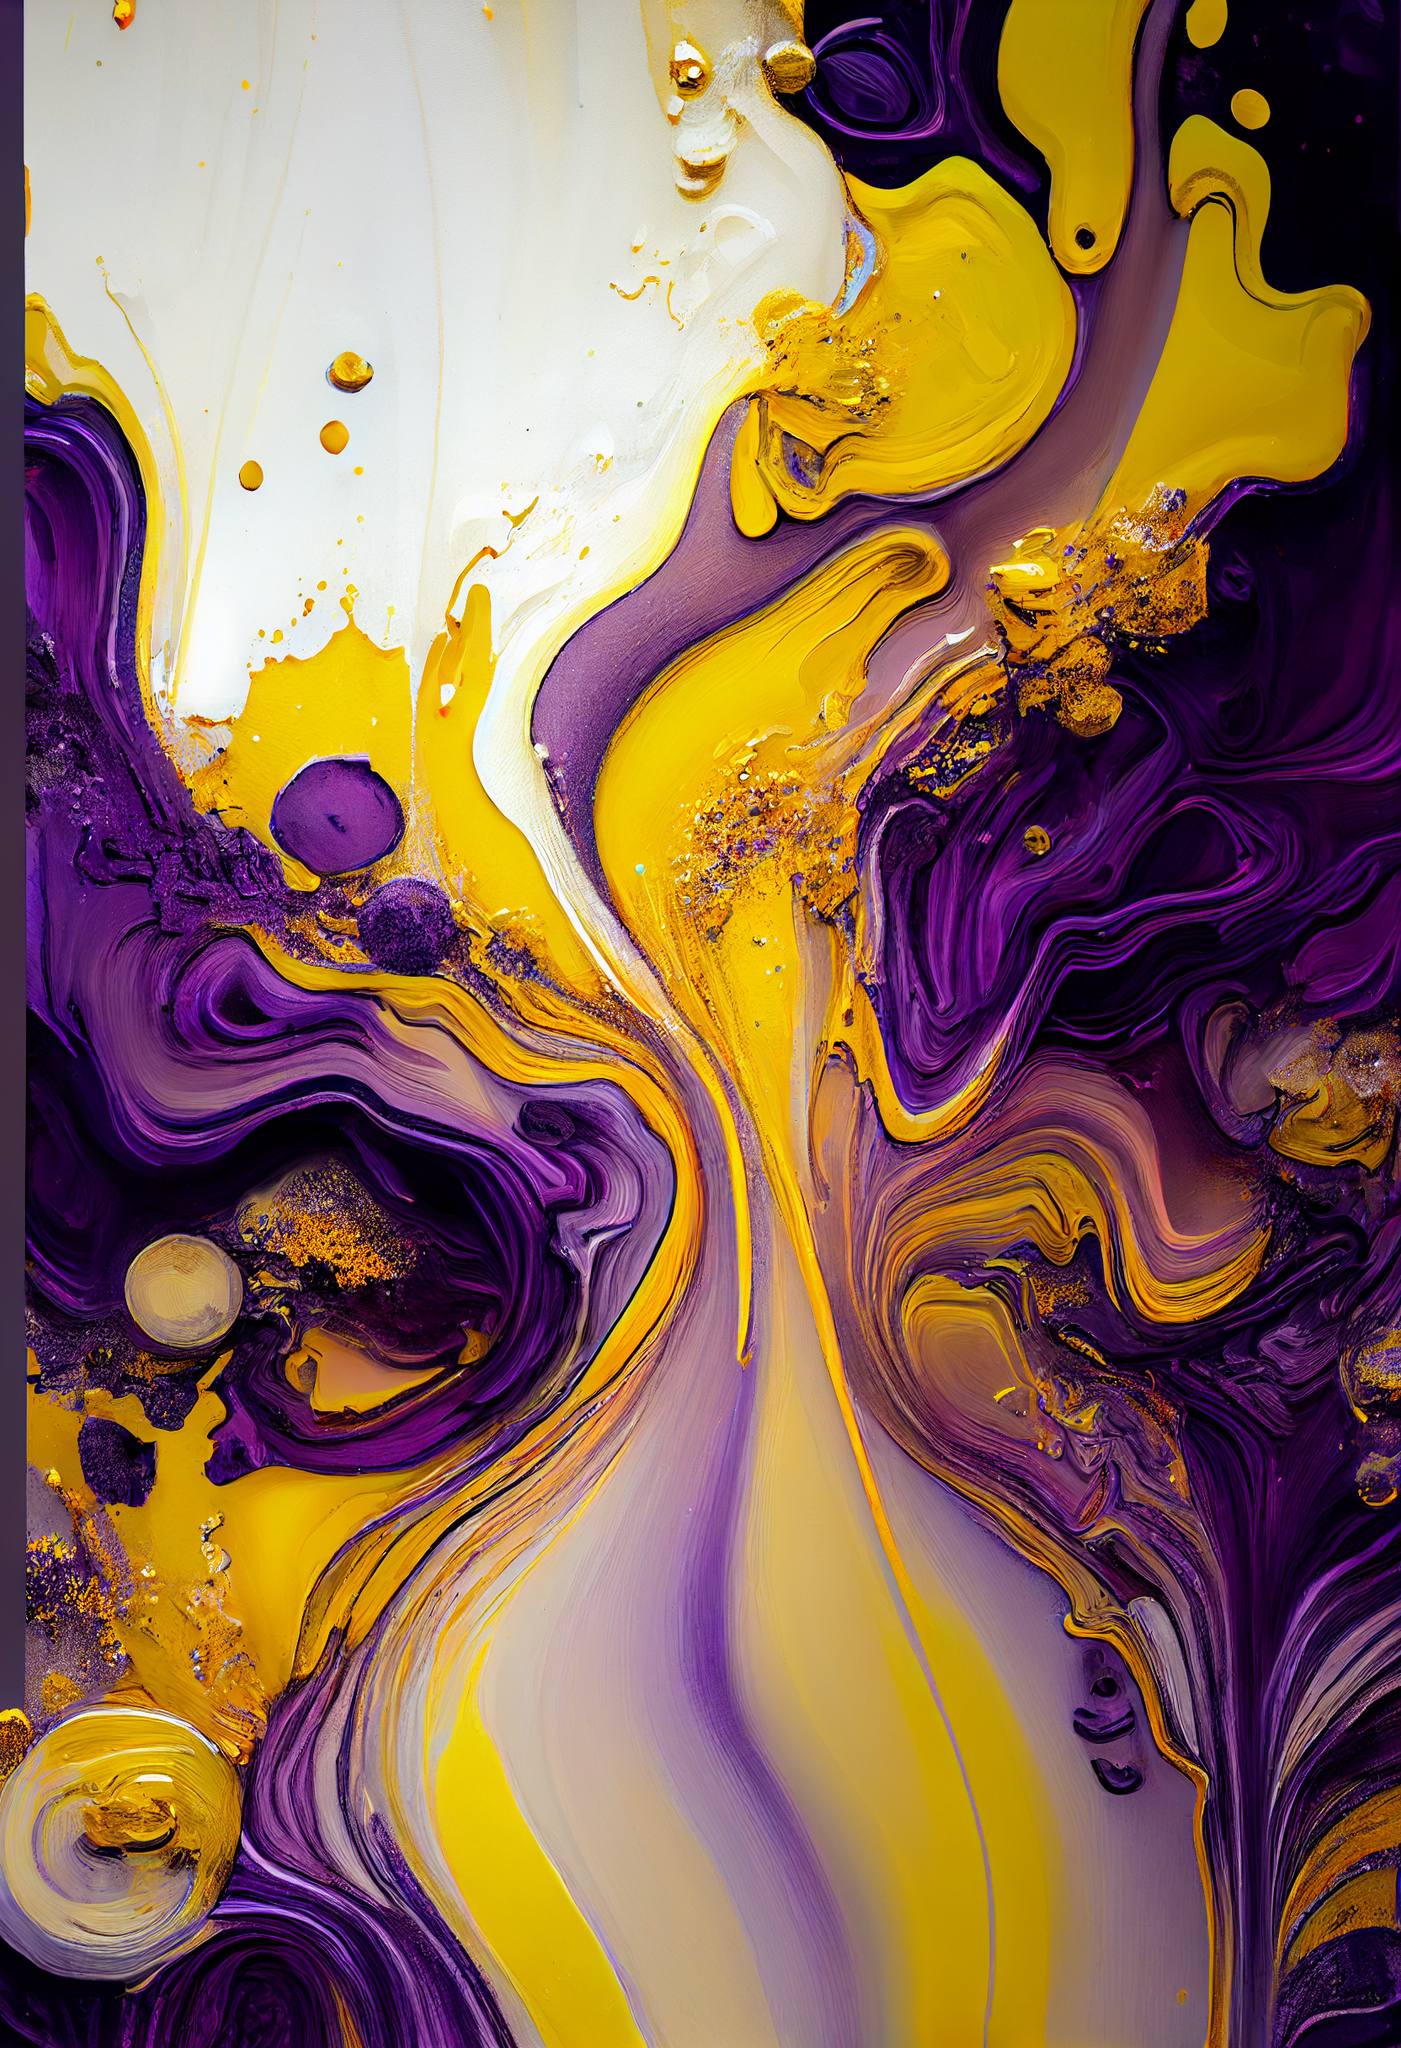 Golden Mists and Lavender Hues: An Oil Color Fluid Art Print